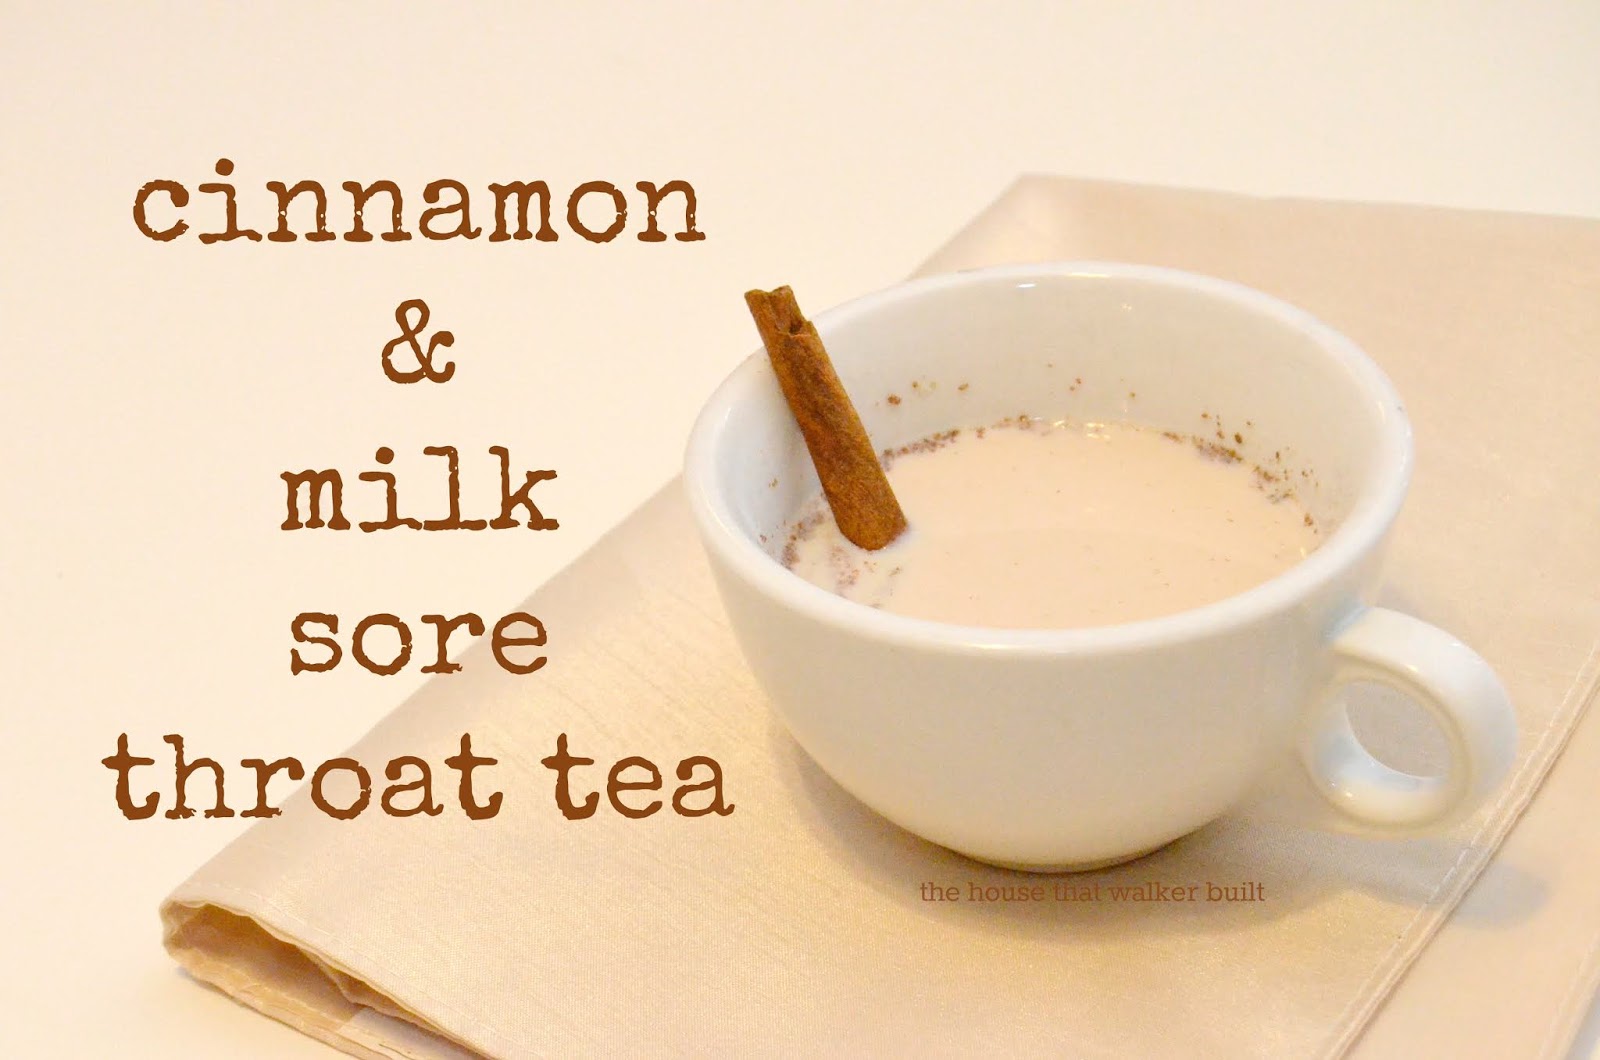 CINNAMON SORE THROAT TEA #drink #milktea #smoothie #cocktail #party